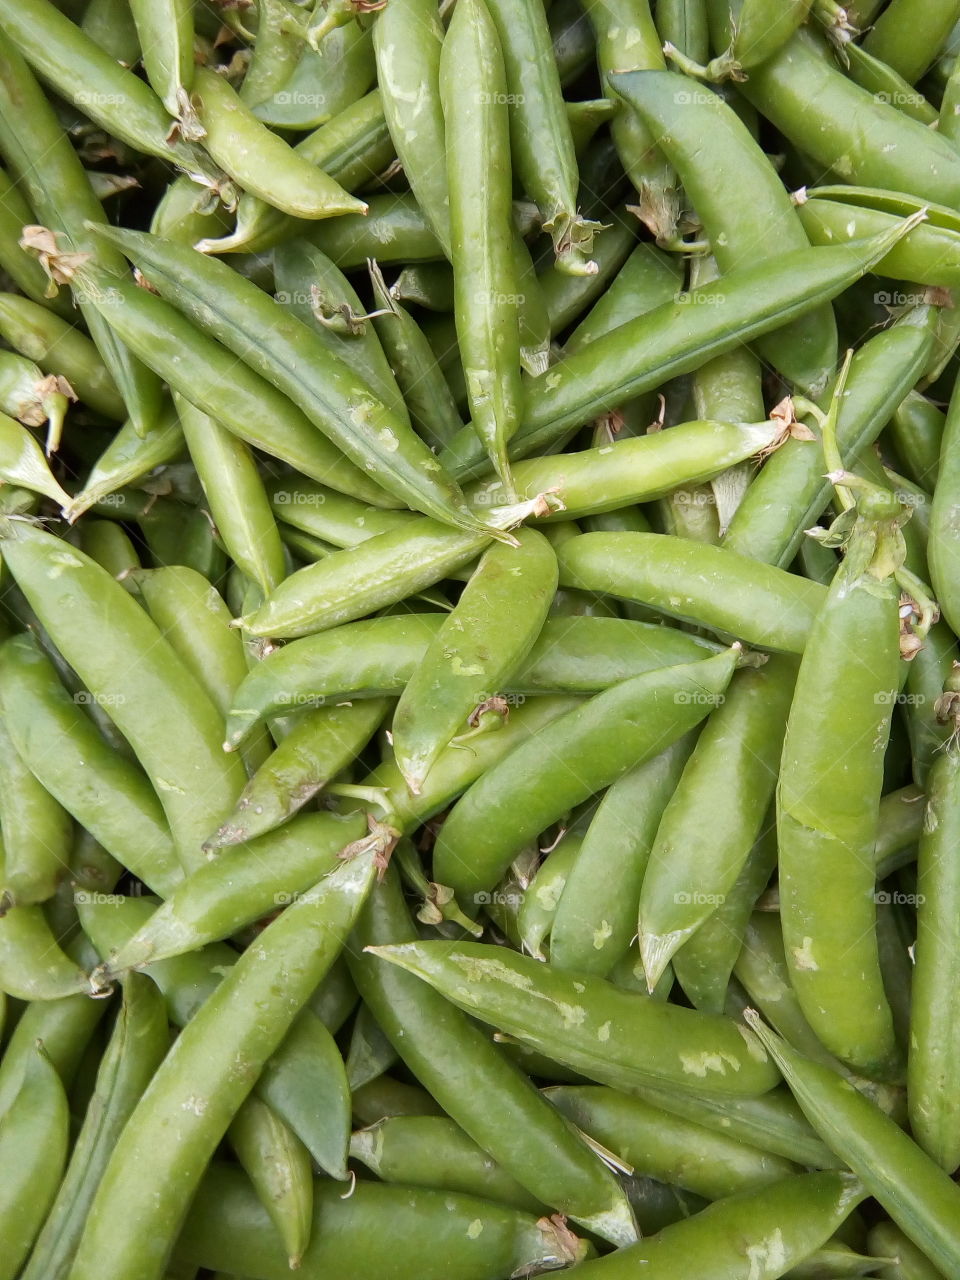 peas- a green tasty vegitable